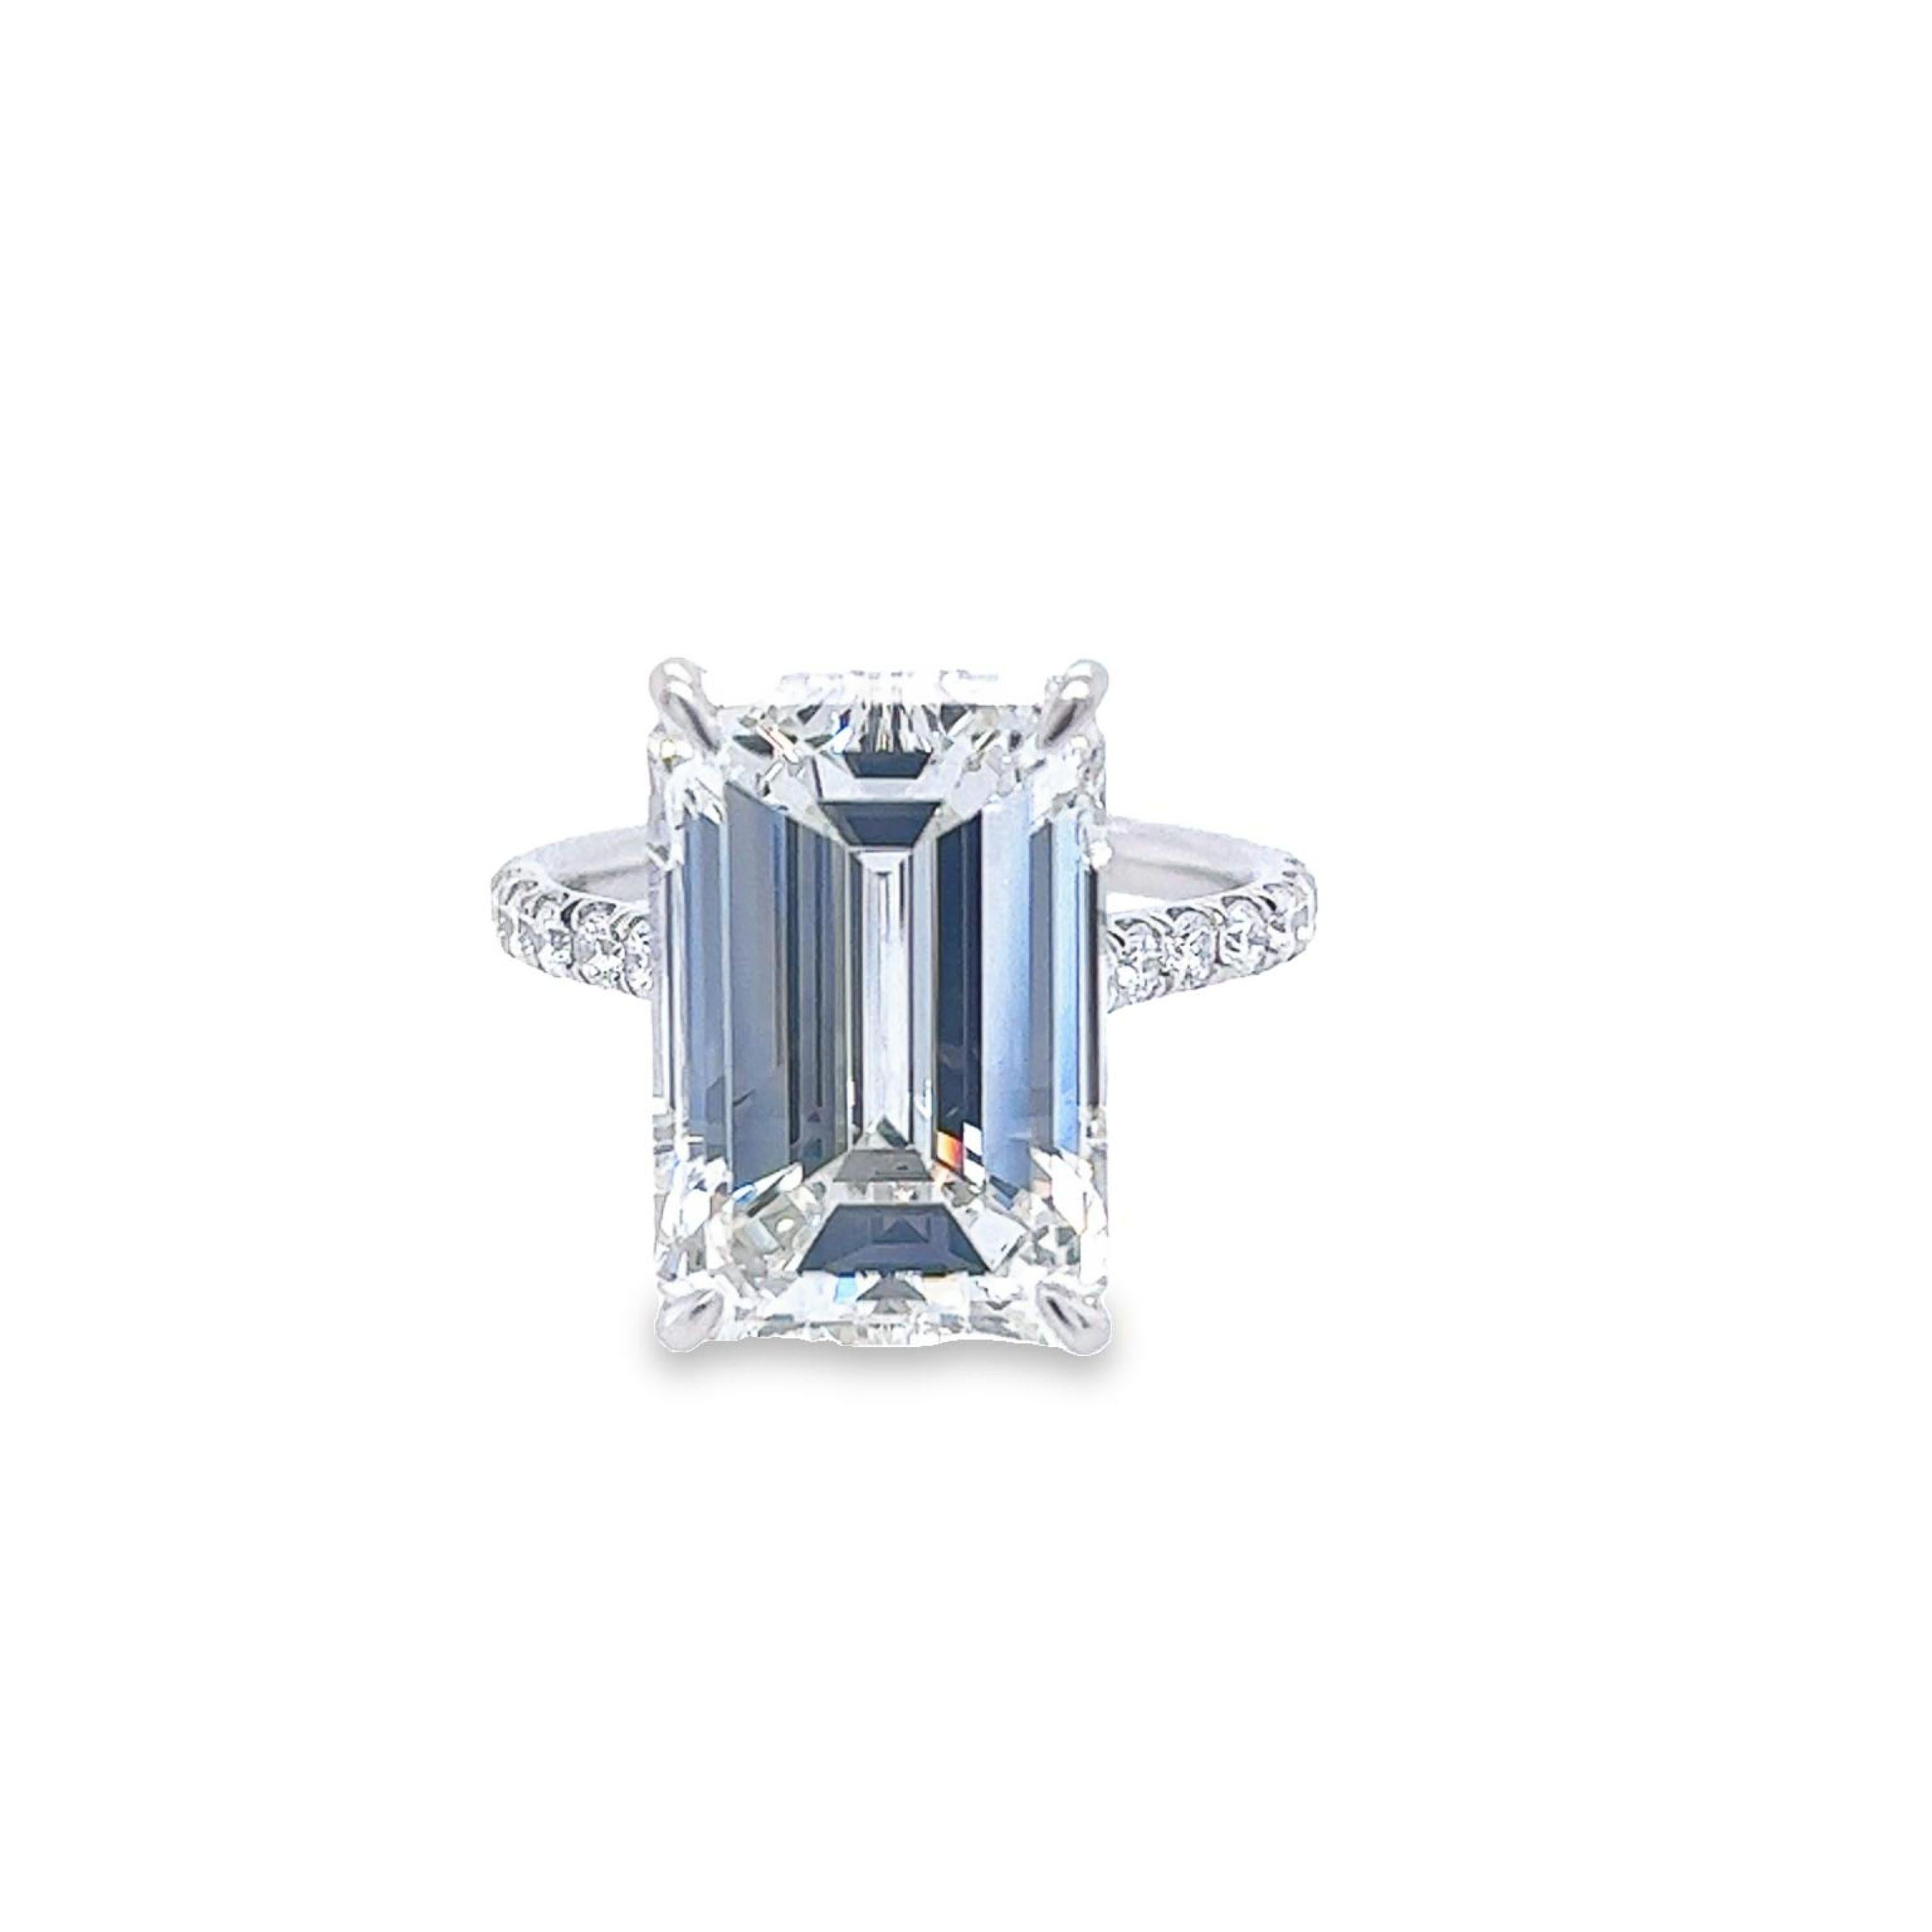 David Rosenberg 10.86 Carat Emerald Cut I VS2 GIA Diamond Engagement Ring For Sale